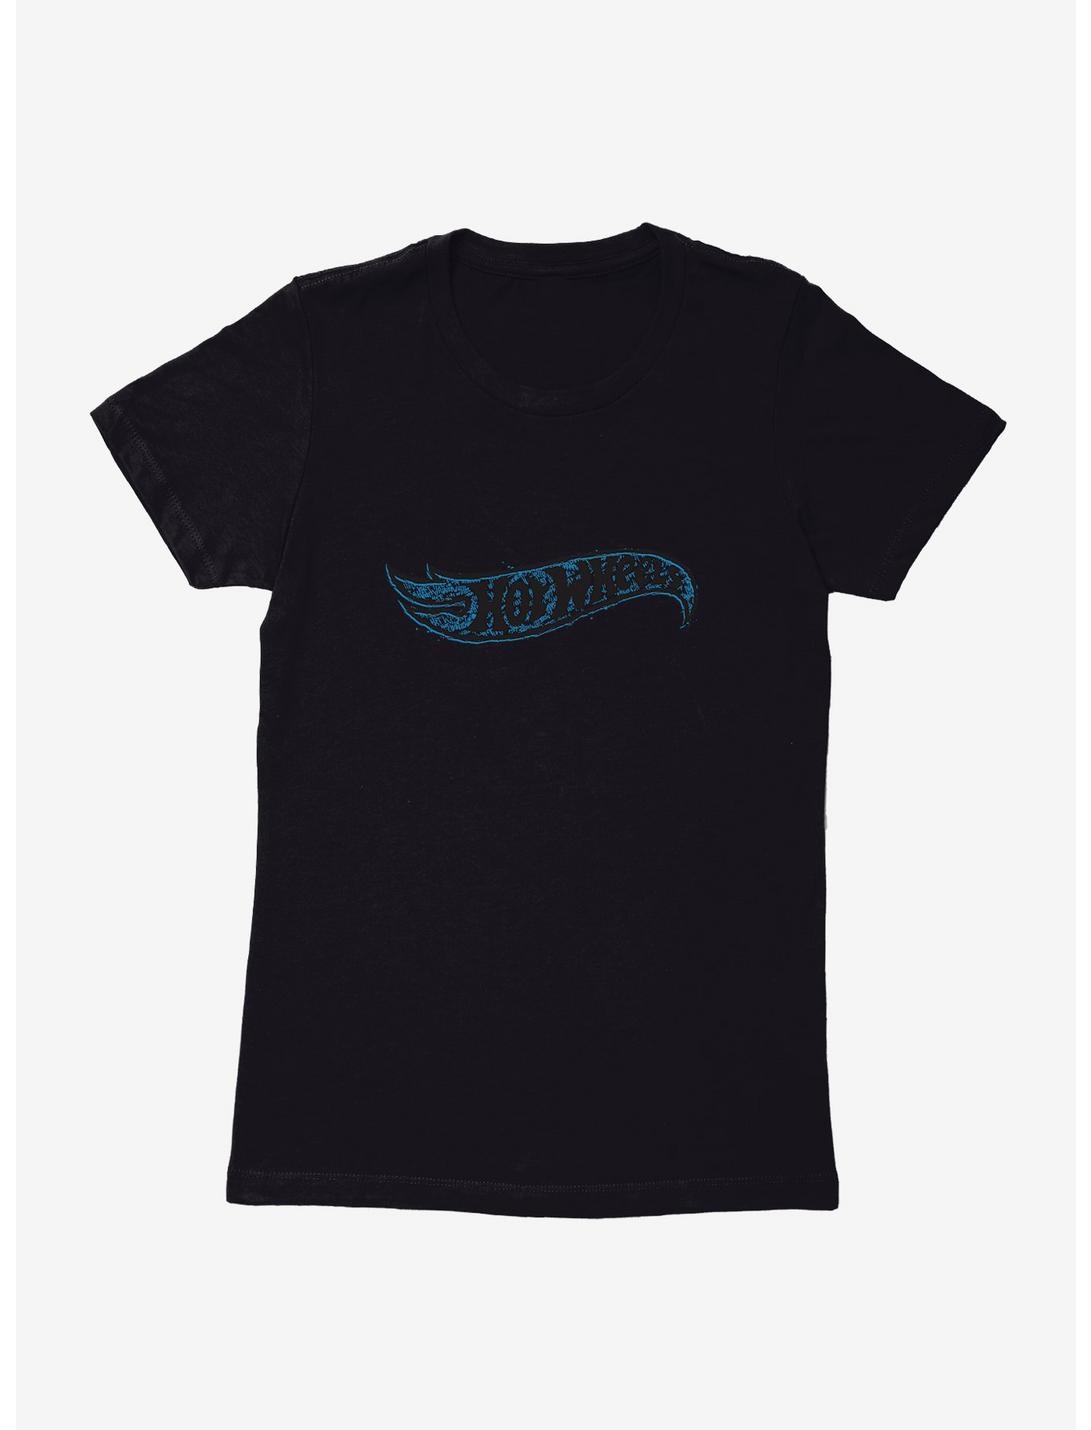 Hot Wheels Faded Blue Logo Womens T-Shirt, BLACK, hi-res